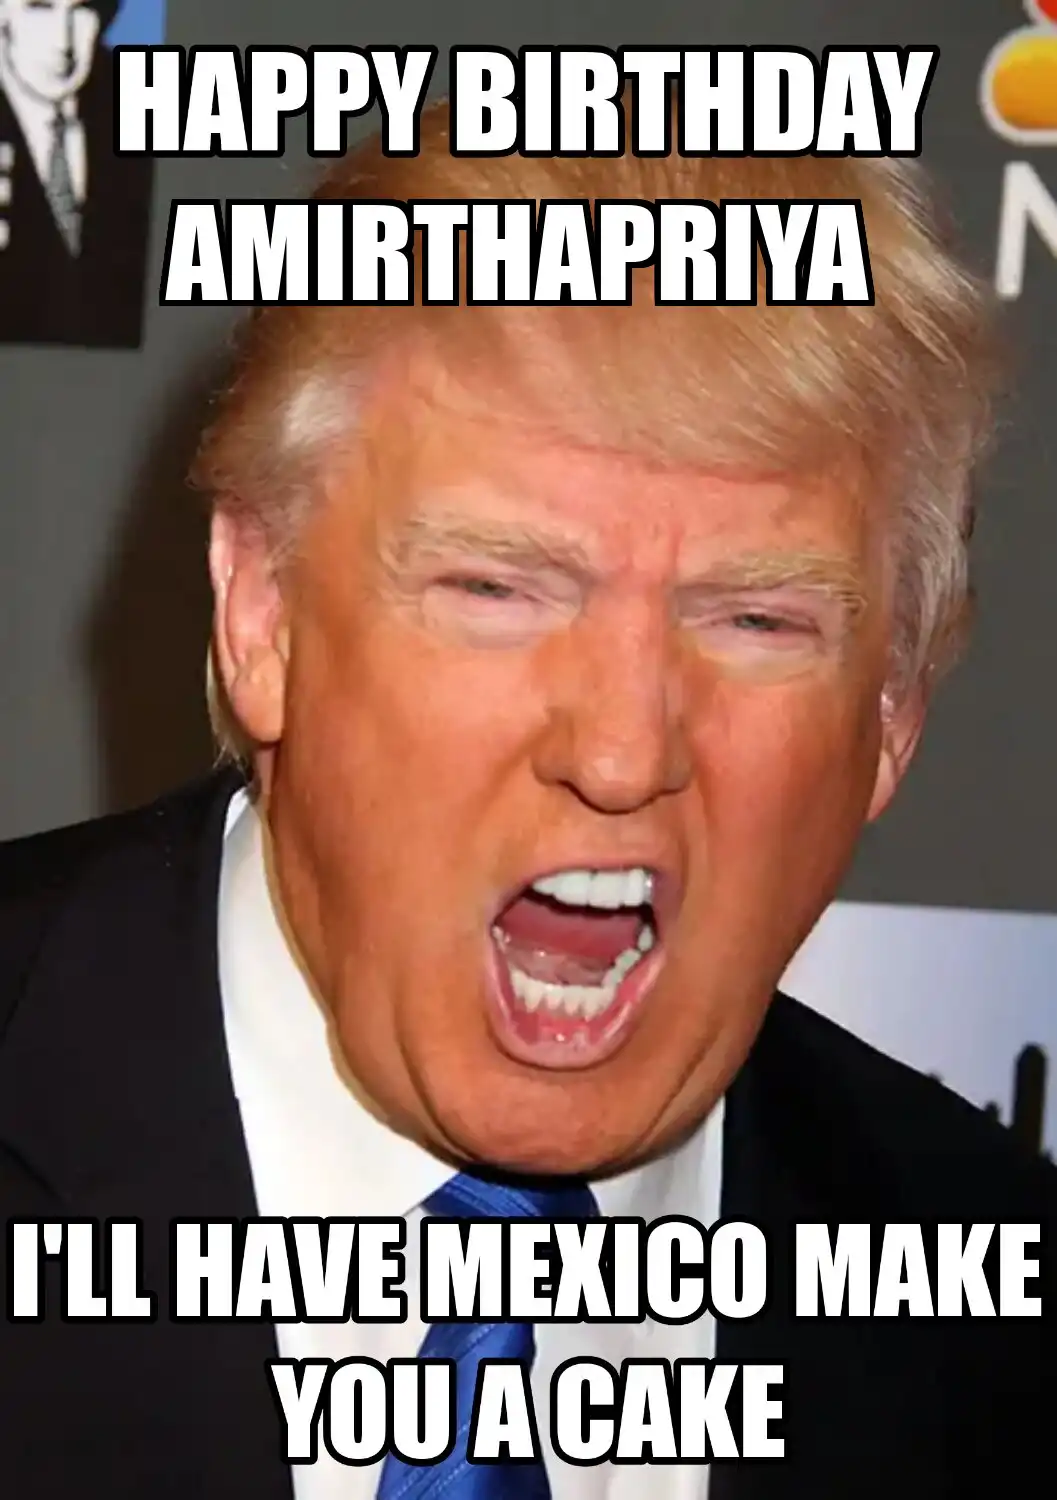 Happy Birthday Amirthapriya Mexico Make You A Cake Meme